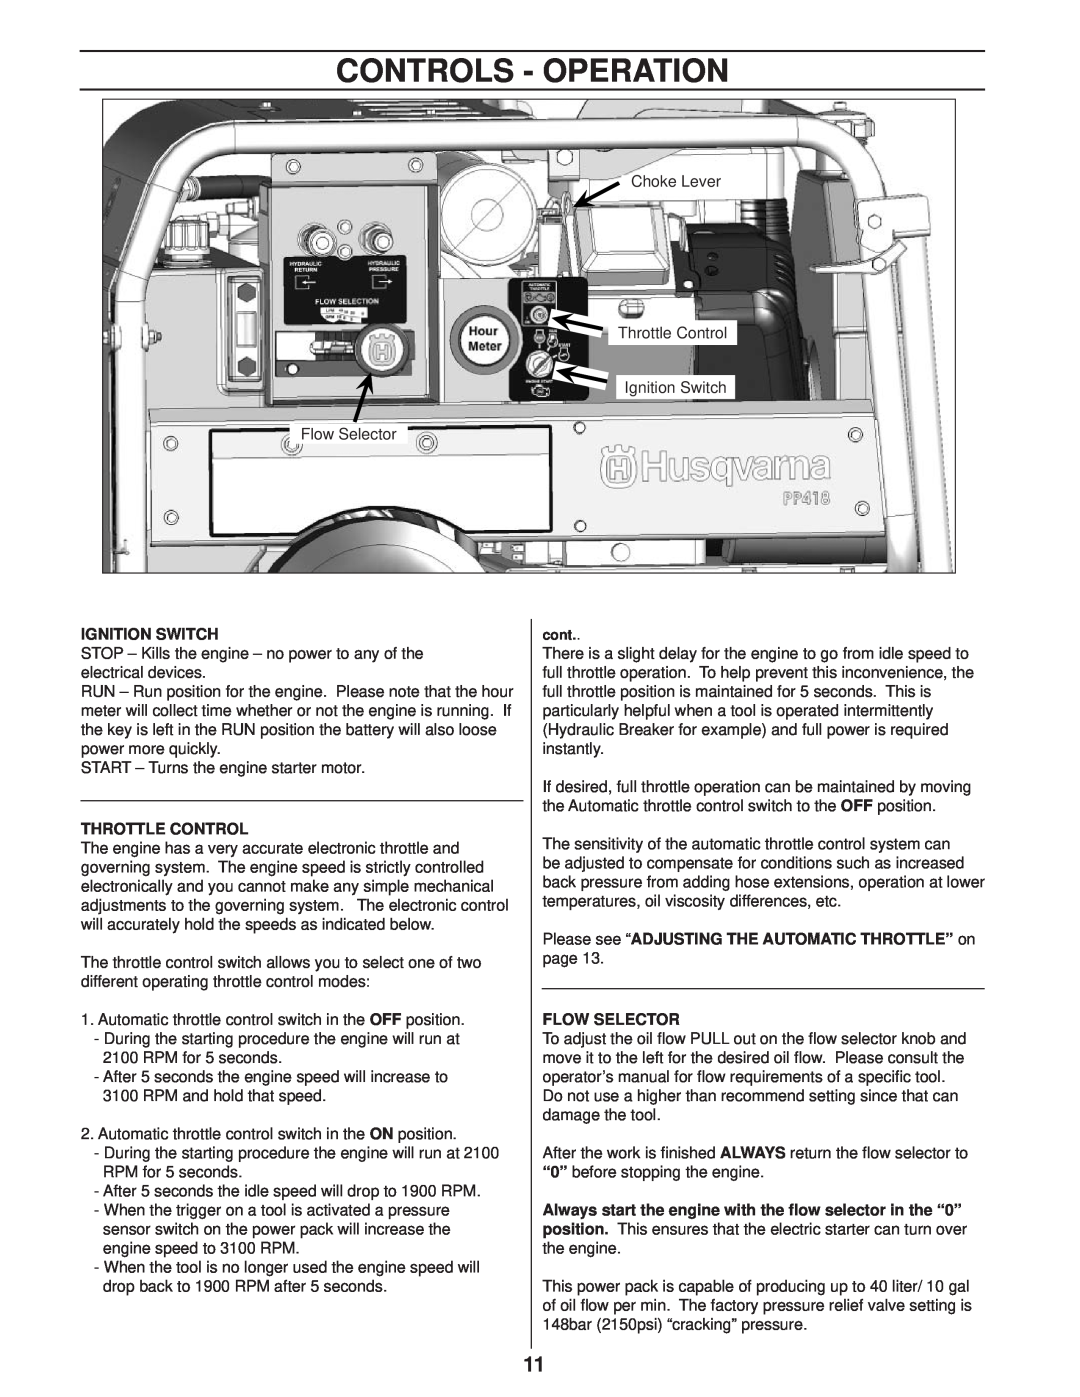 Husqvarna PP 418 manuel dutilisation Controls - Operation, Ignition Switch, Throttle Control 